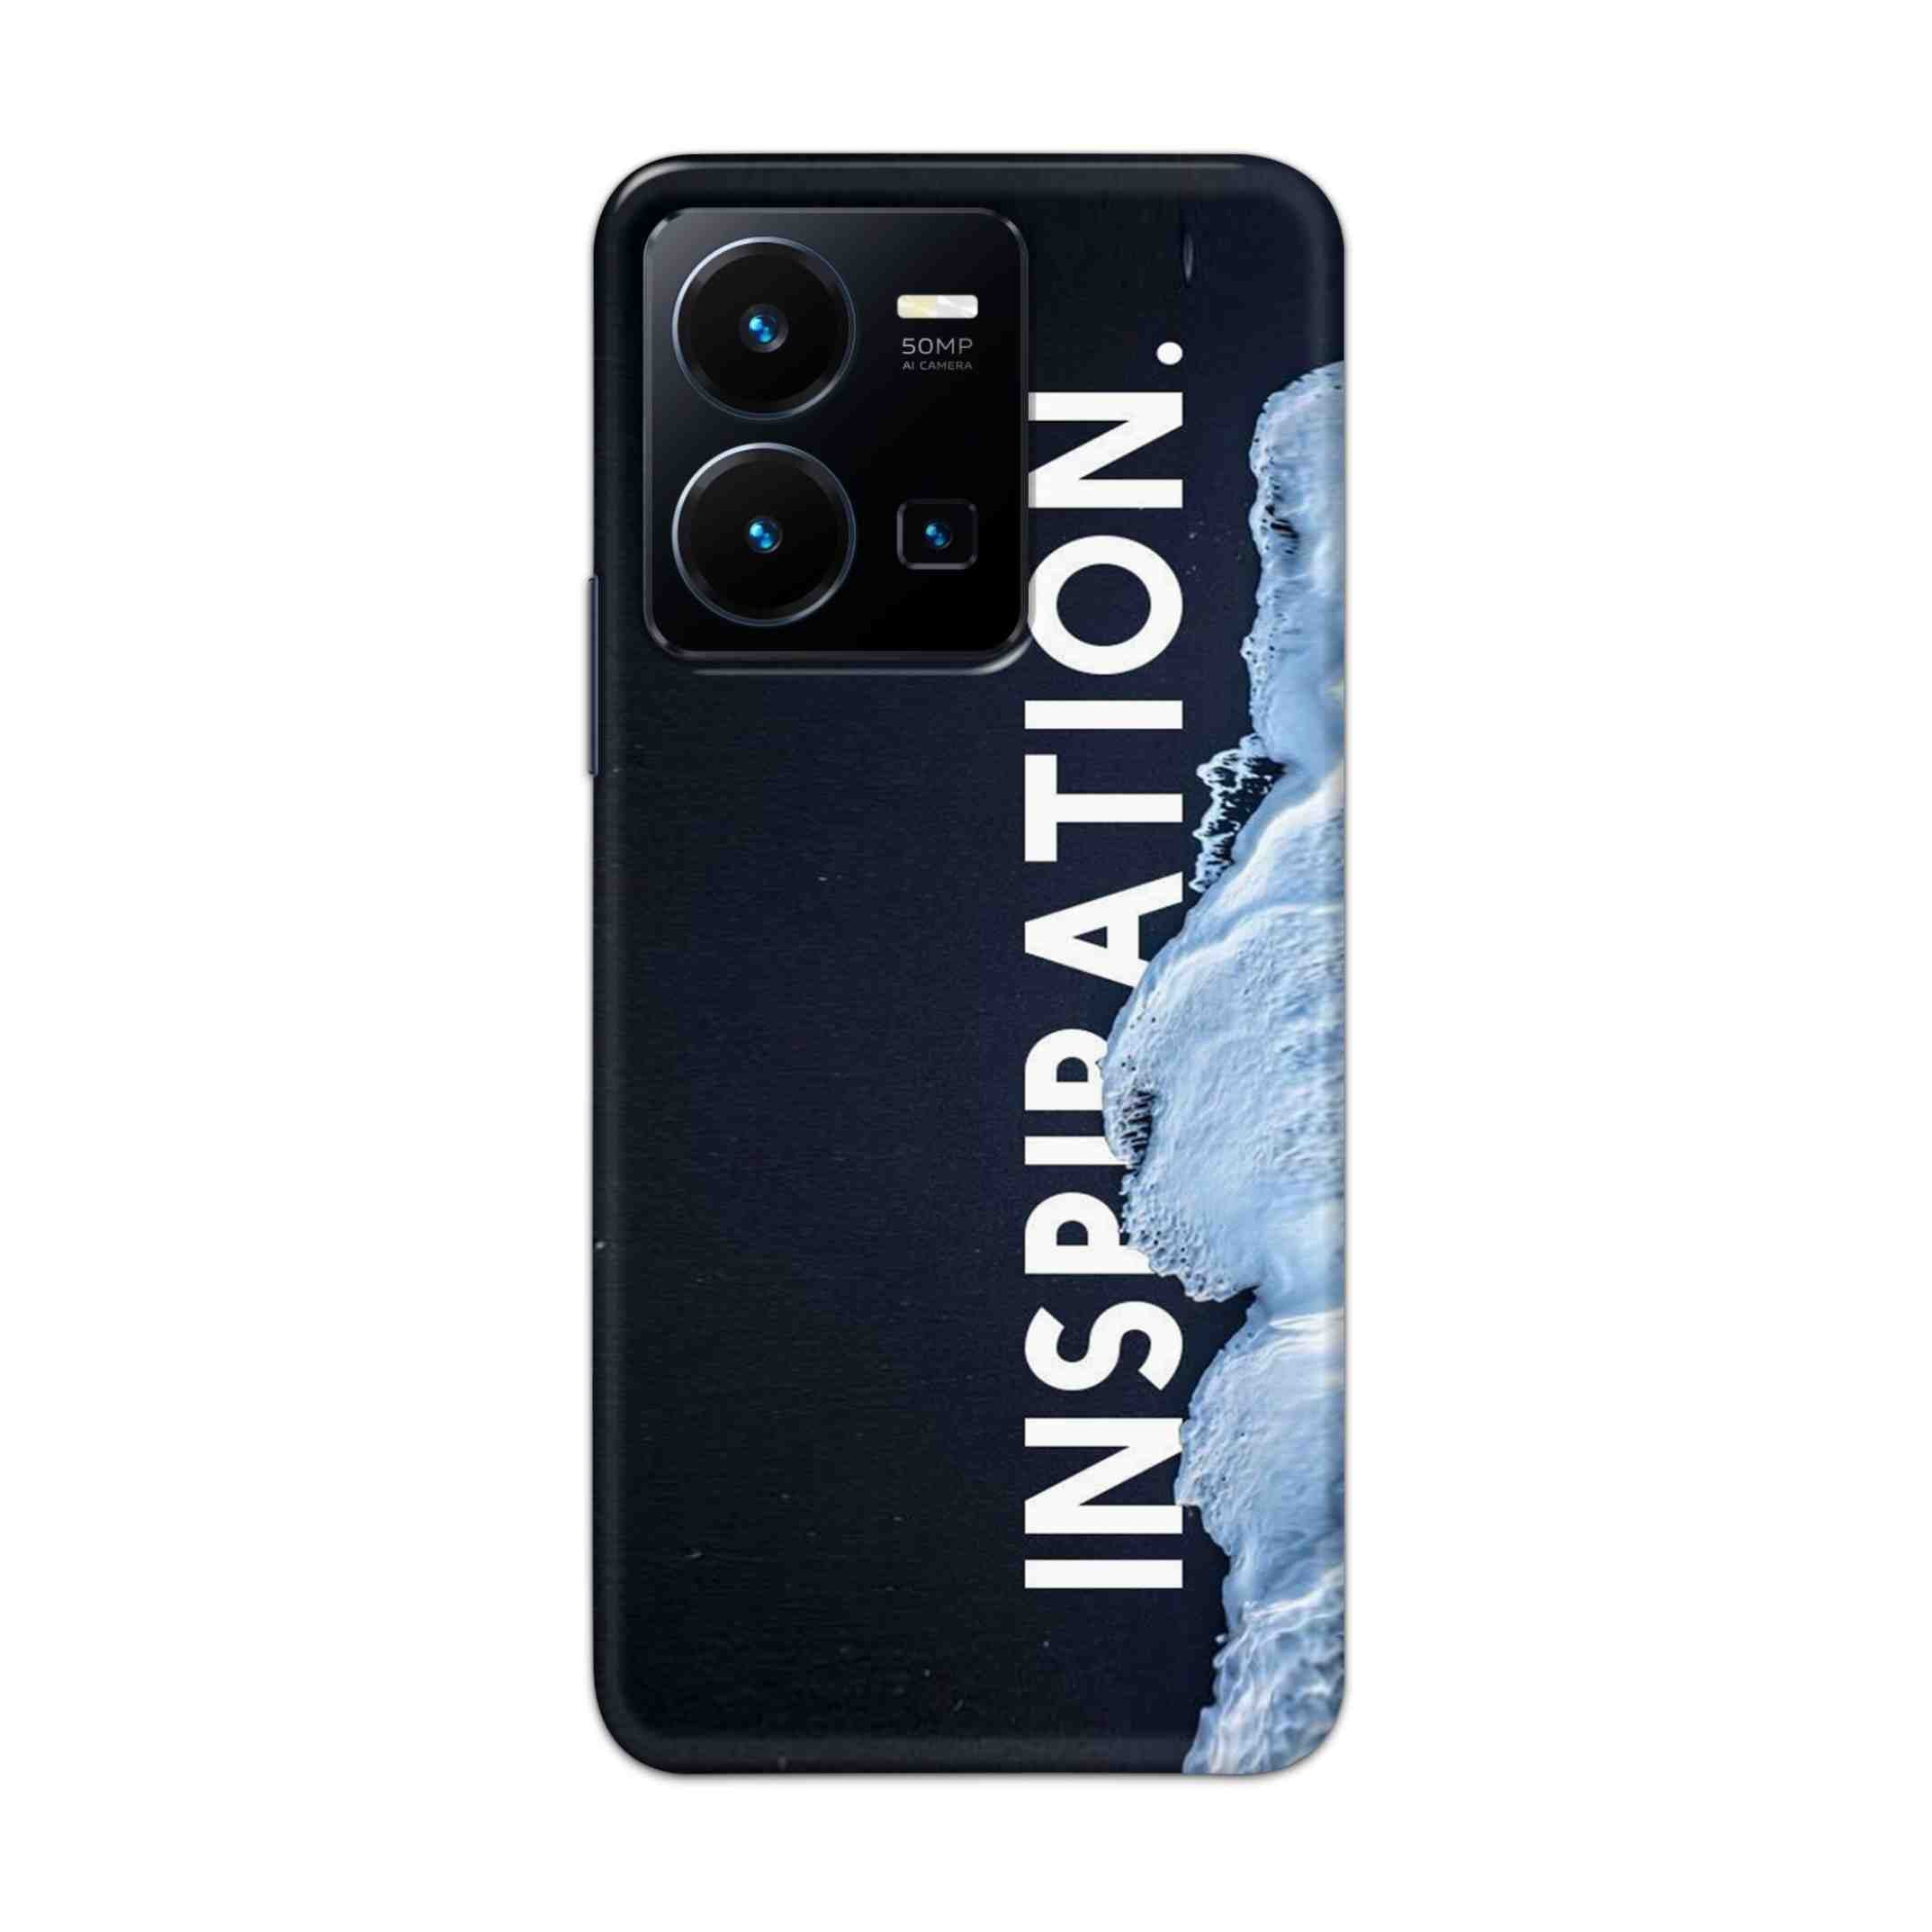 Buy Inspiration Hard Back Mobile Phone Case Cover For Vivo Y35 2022 Online